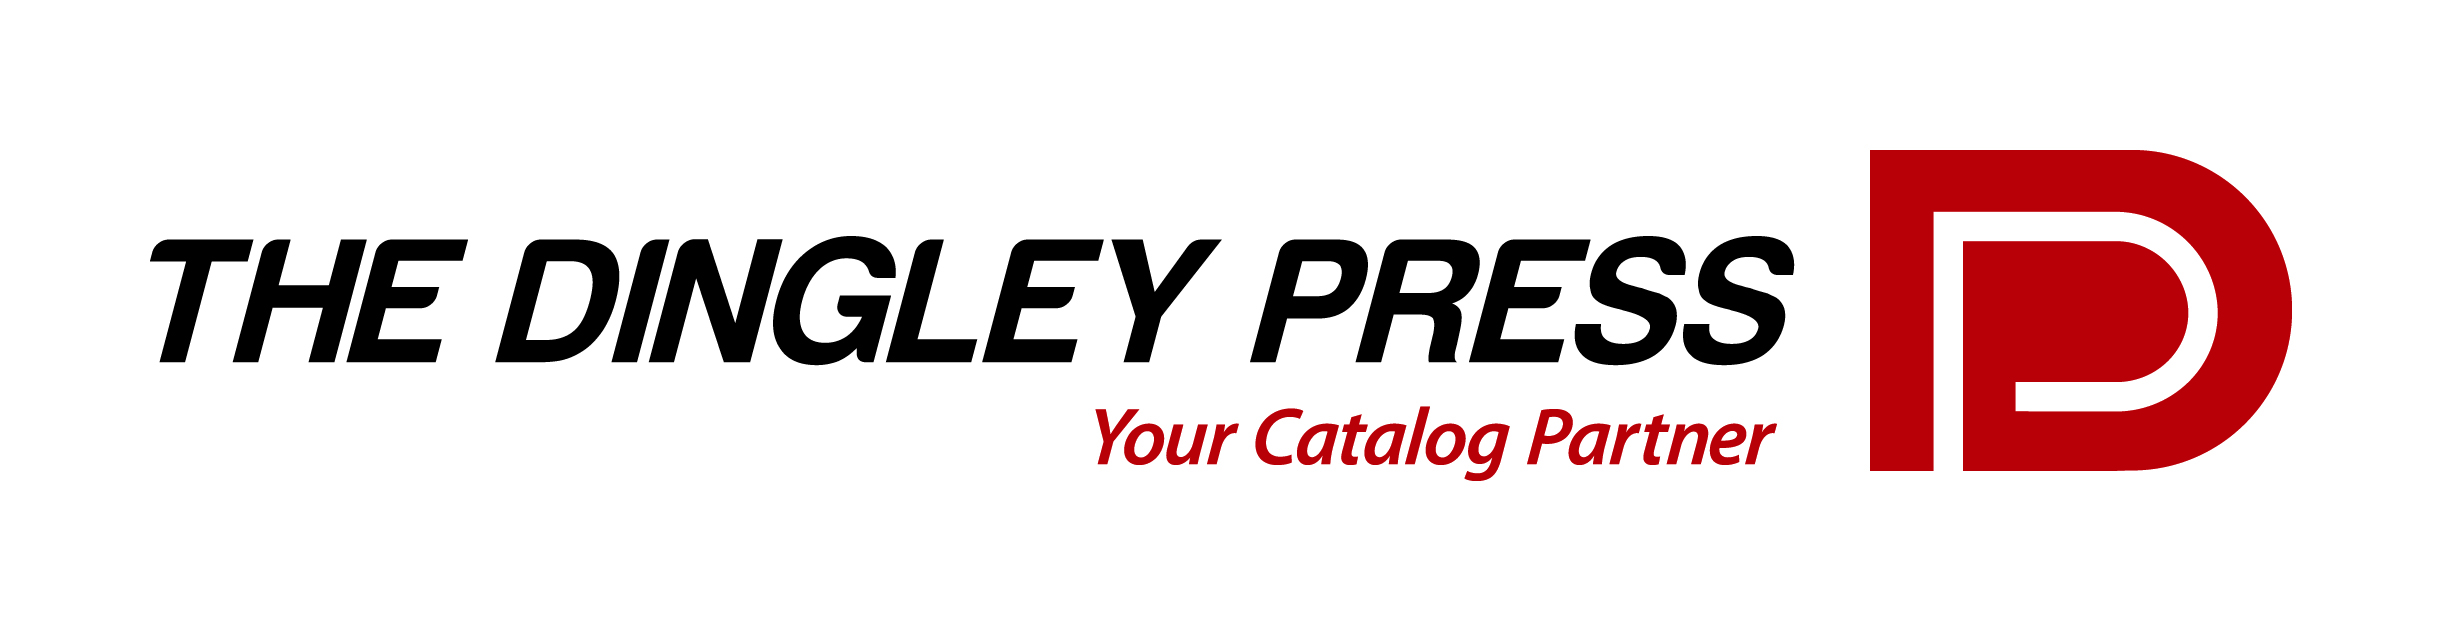 The Dingley Press logo